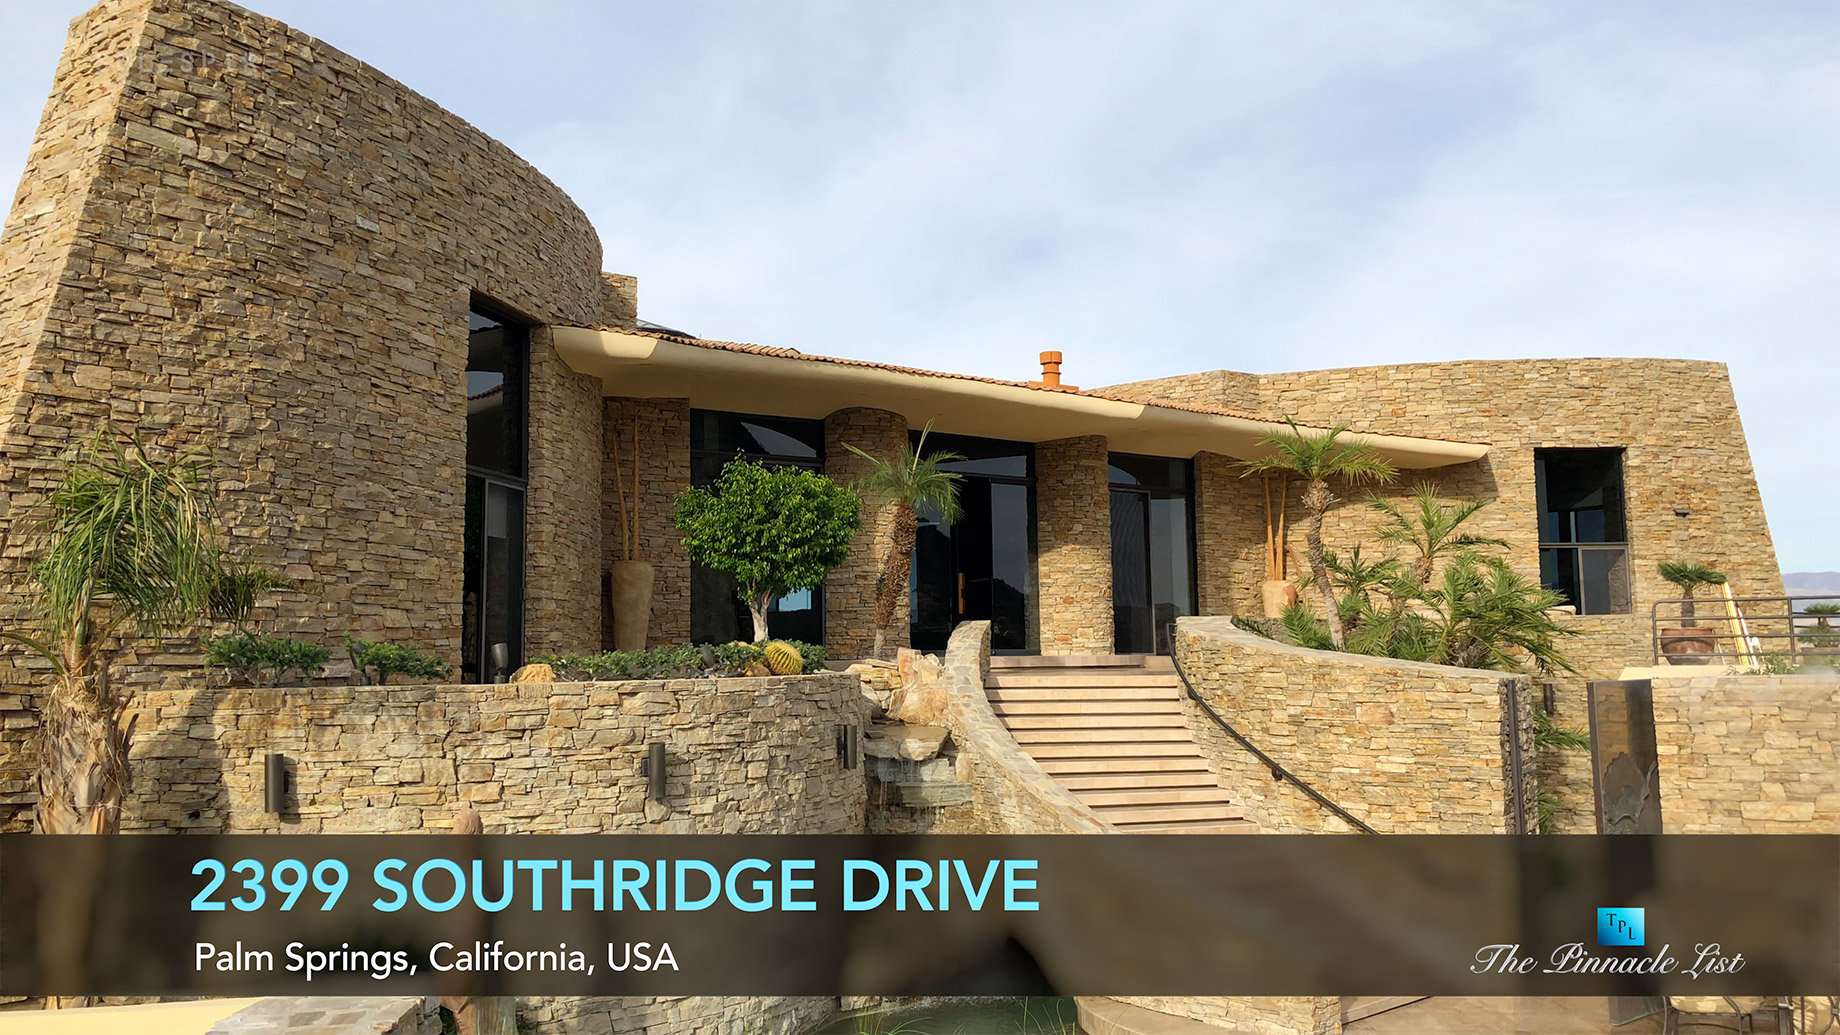 2399 Southridge Dr, Palm Springs, California - Marcus Anthony & Josh Reef - Luxury Real Estate - Video